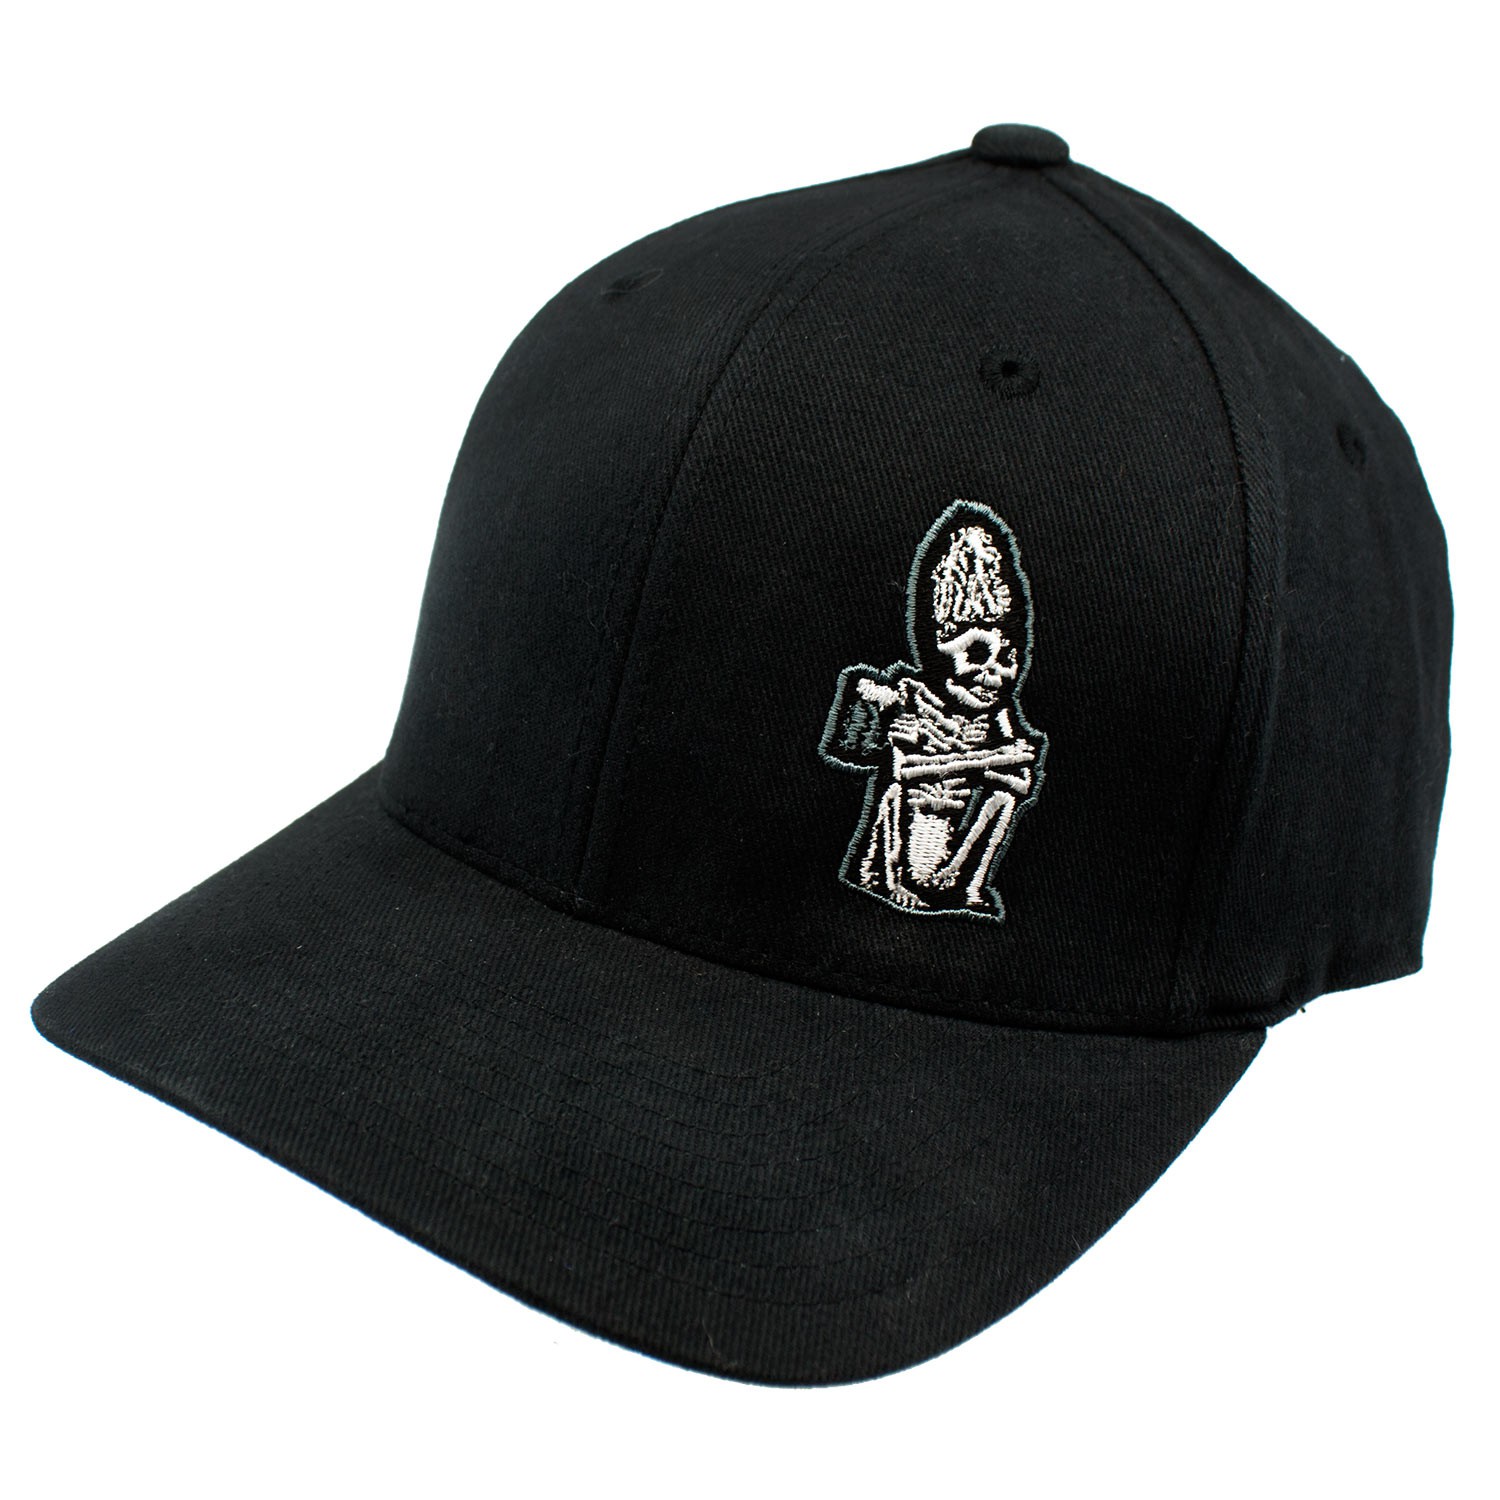 Dead Guy Embroidered Black Hat